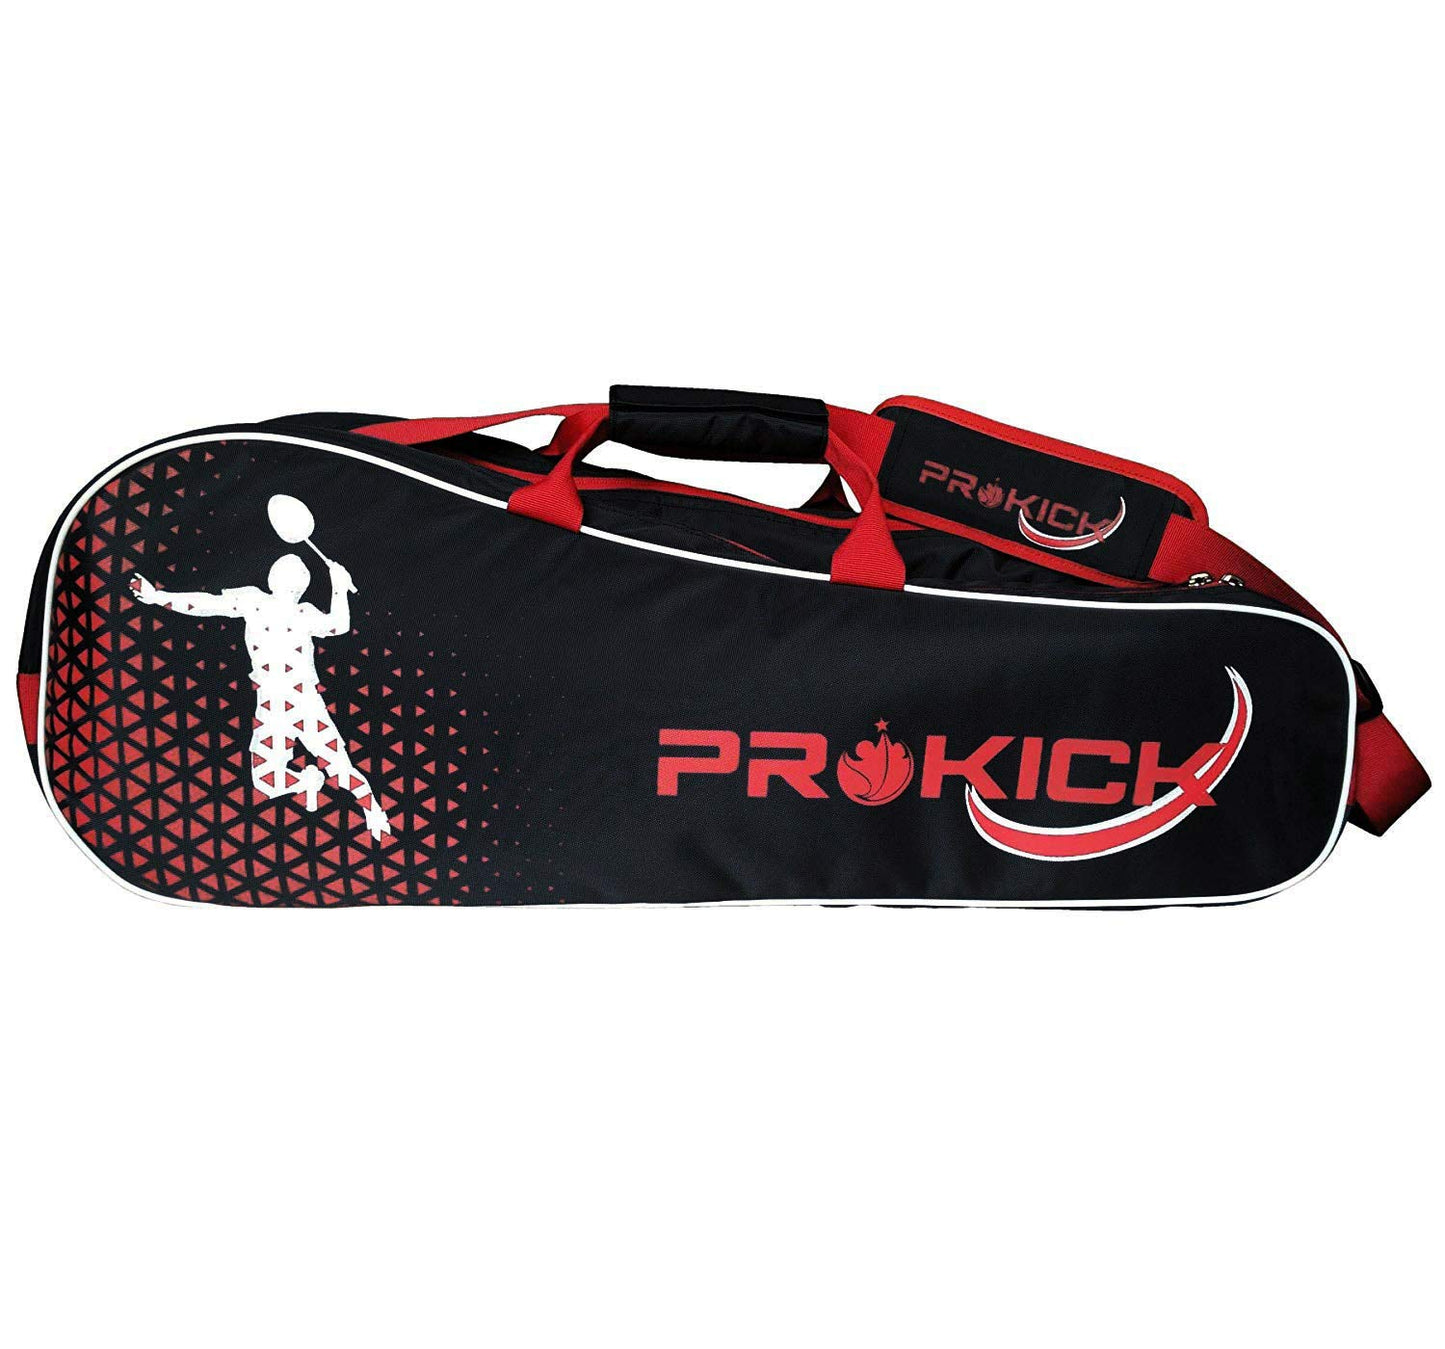 Prokick Badminton Kitbag with Double Zipper Compartments - Black/Red - Best Price online Prokicksports.com